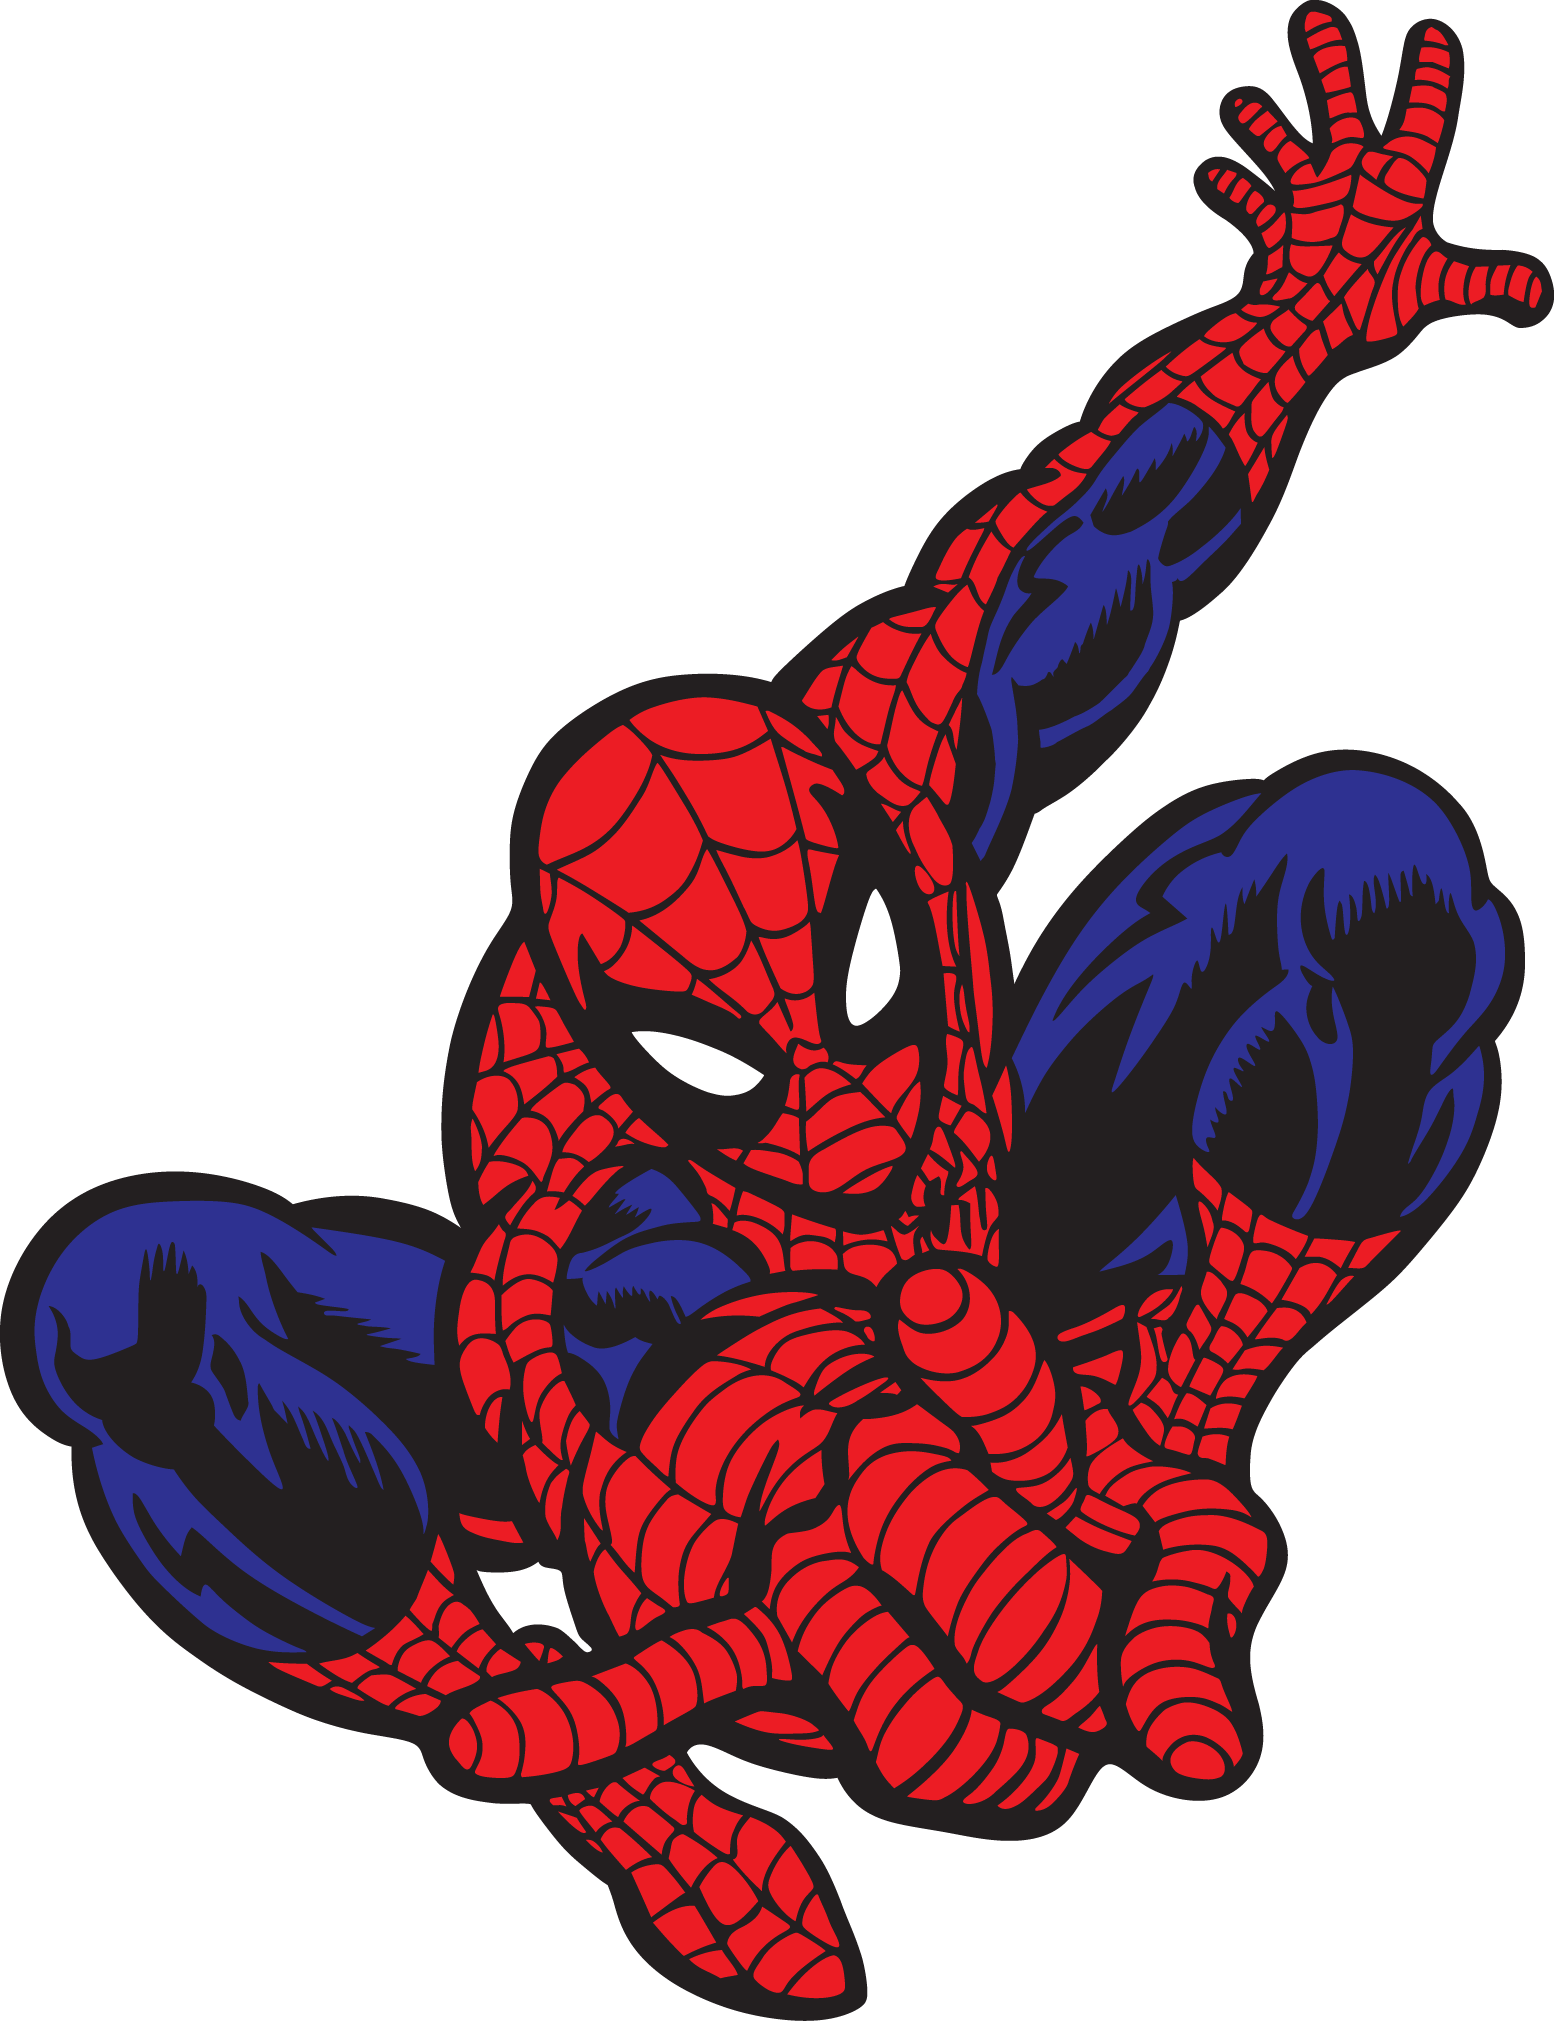 superheroes clipart spiderman kid